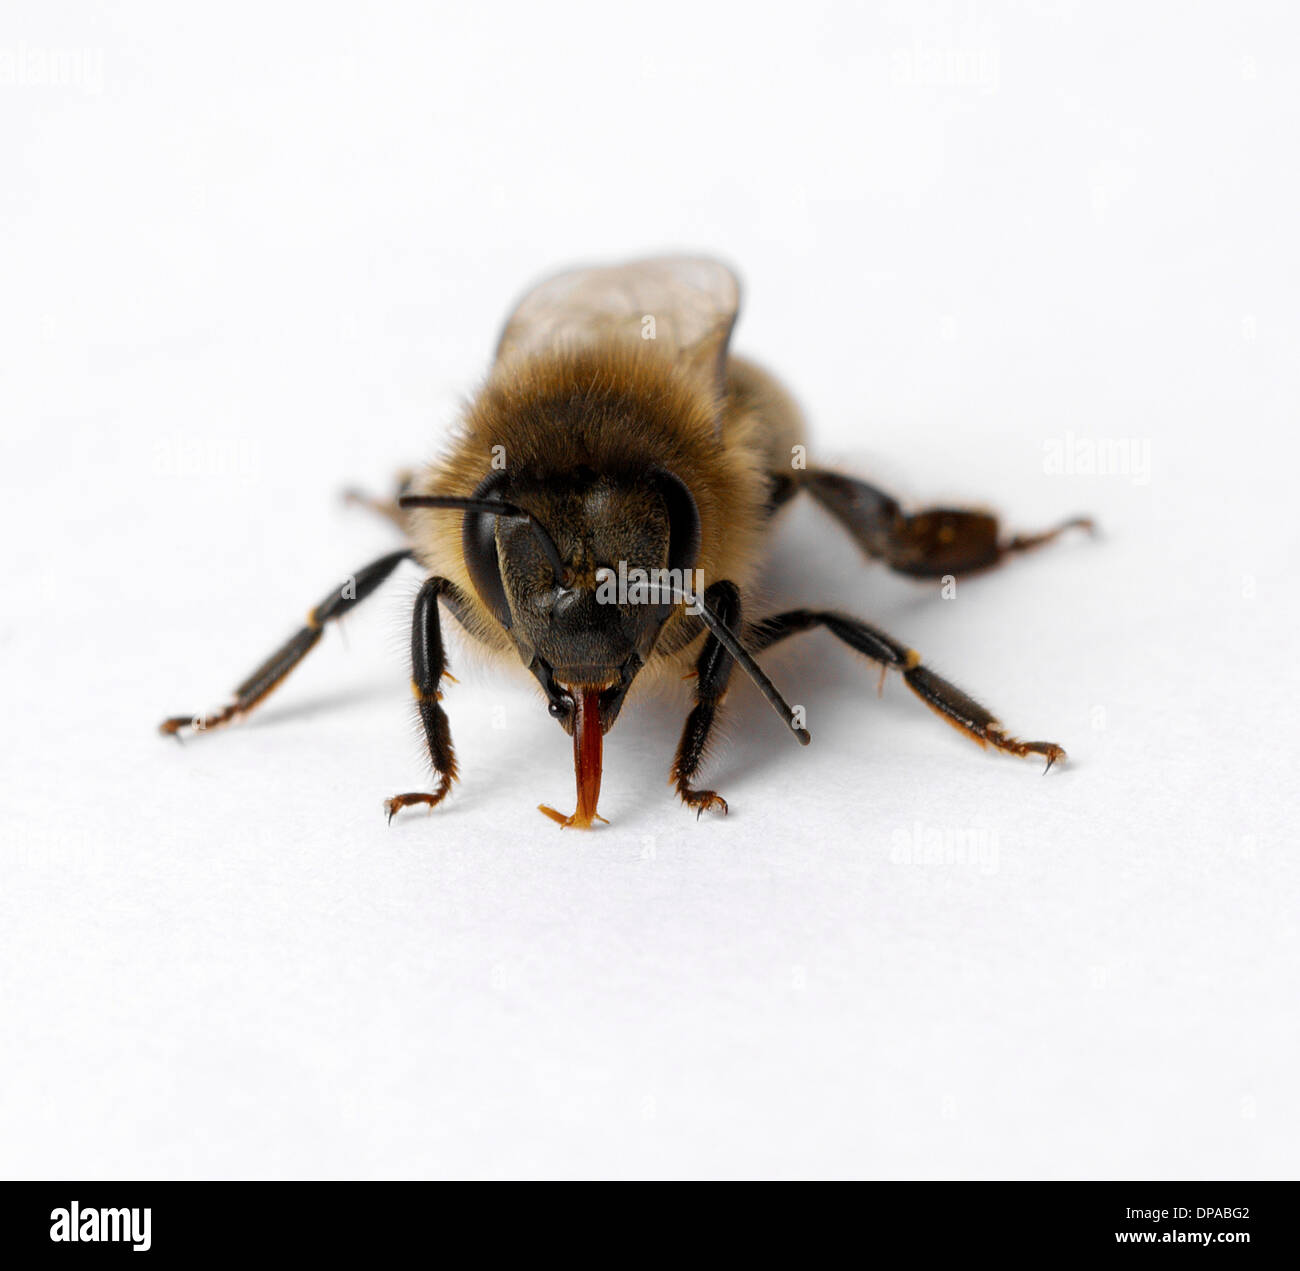 Miel de abejas con lengua fuera Foto de stock